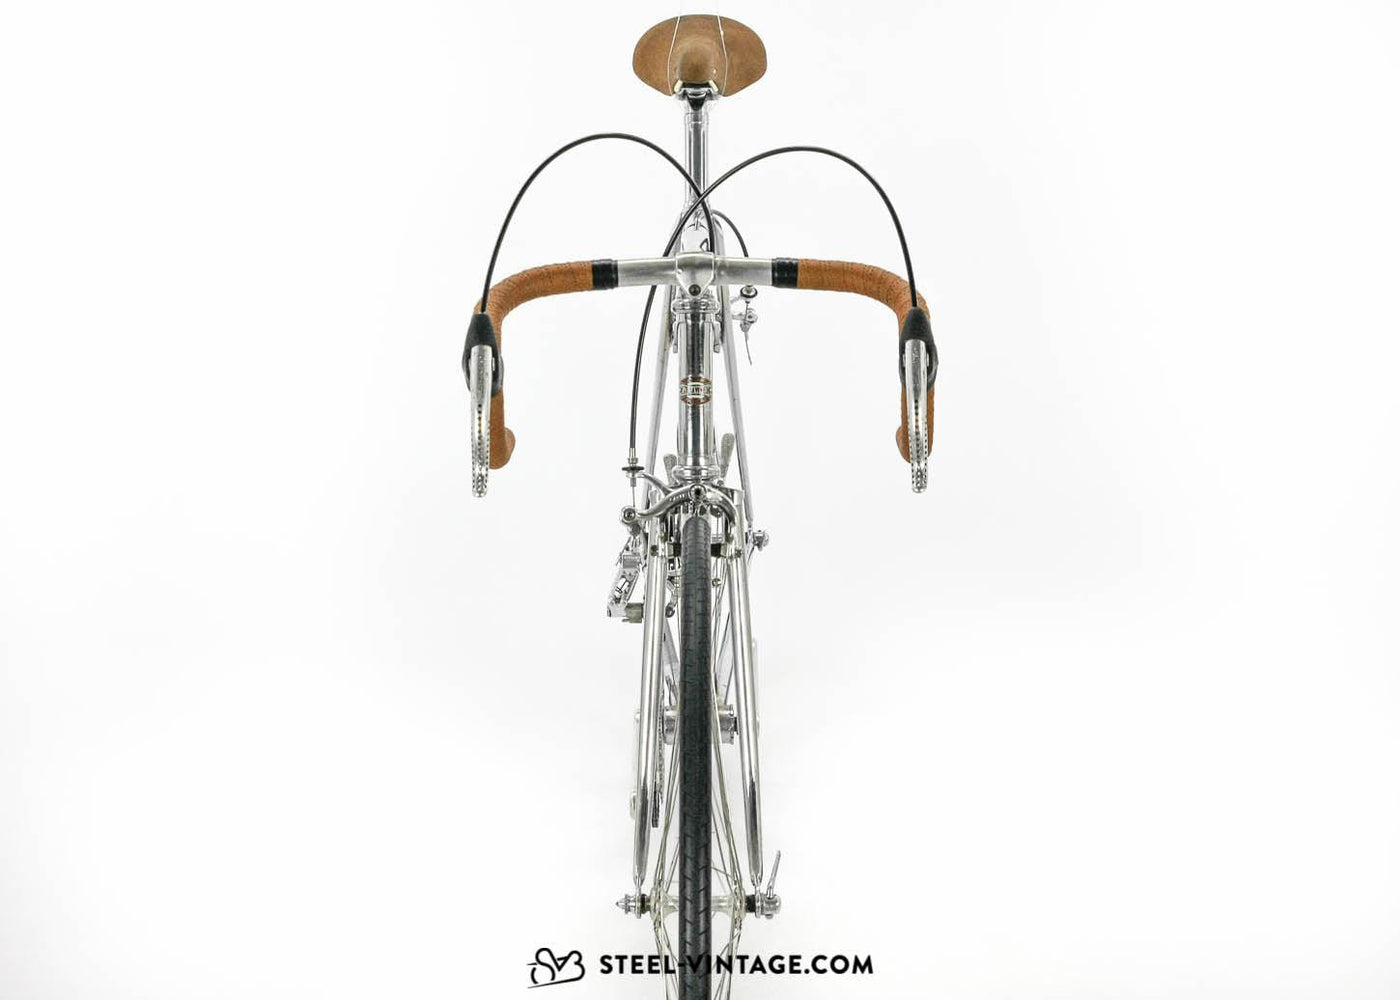 Stella Veneta Modello Speciale Eroica Road Bike 1970s - Steel Vintage Bikes